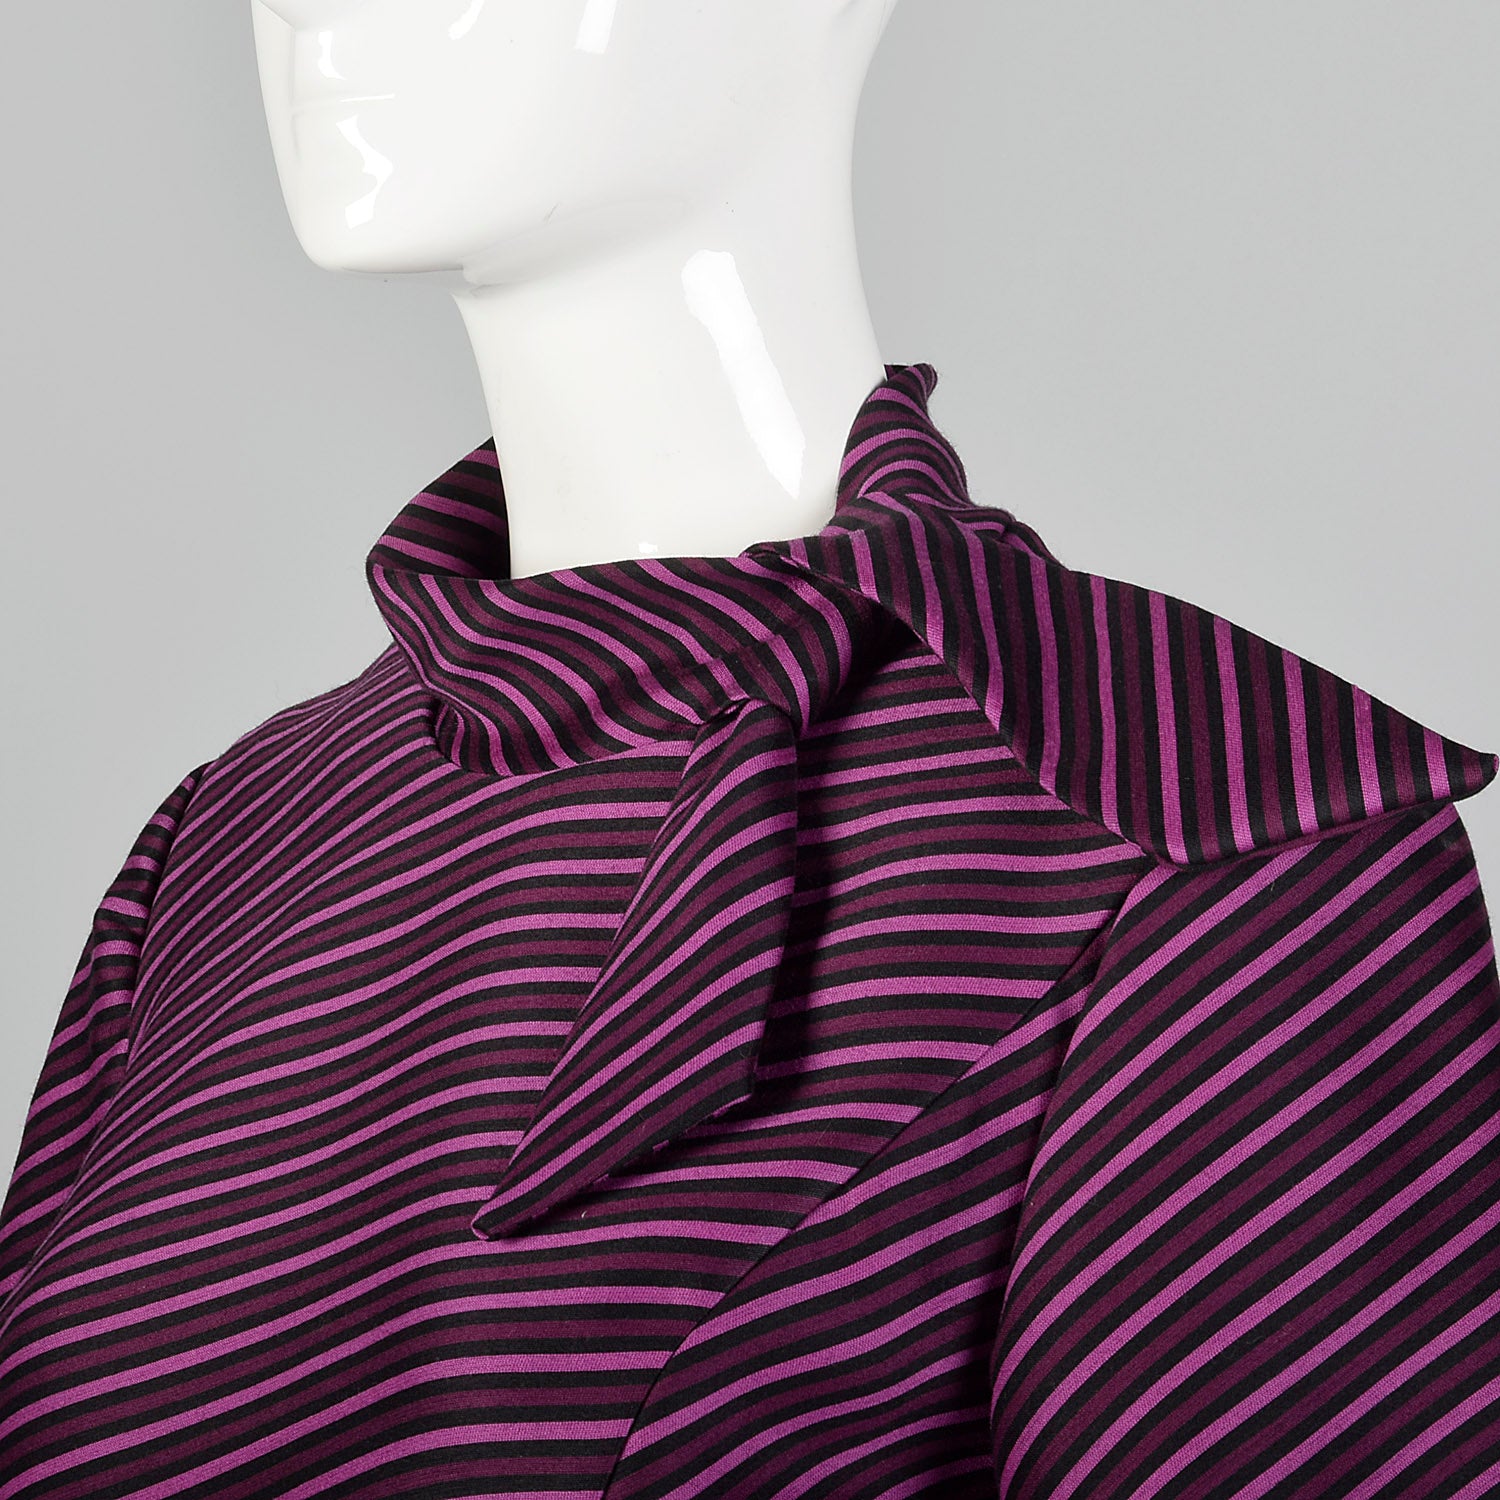 Medium 1960s Asymmetric Stripe Shift Dress